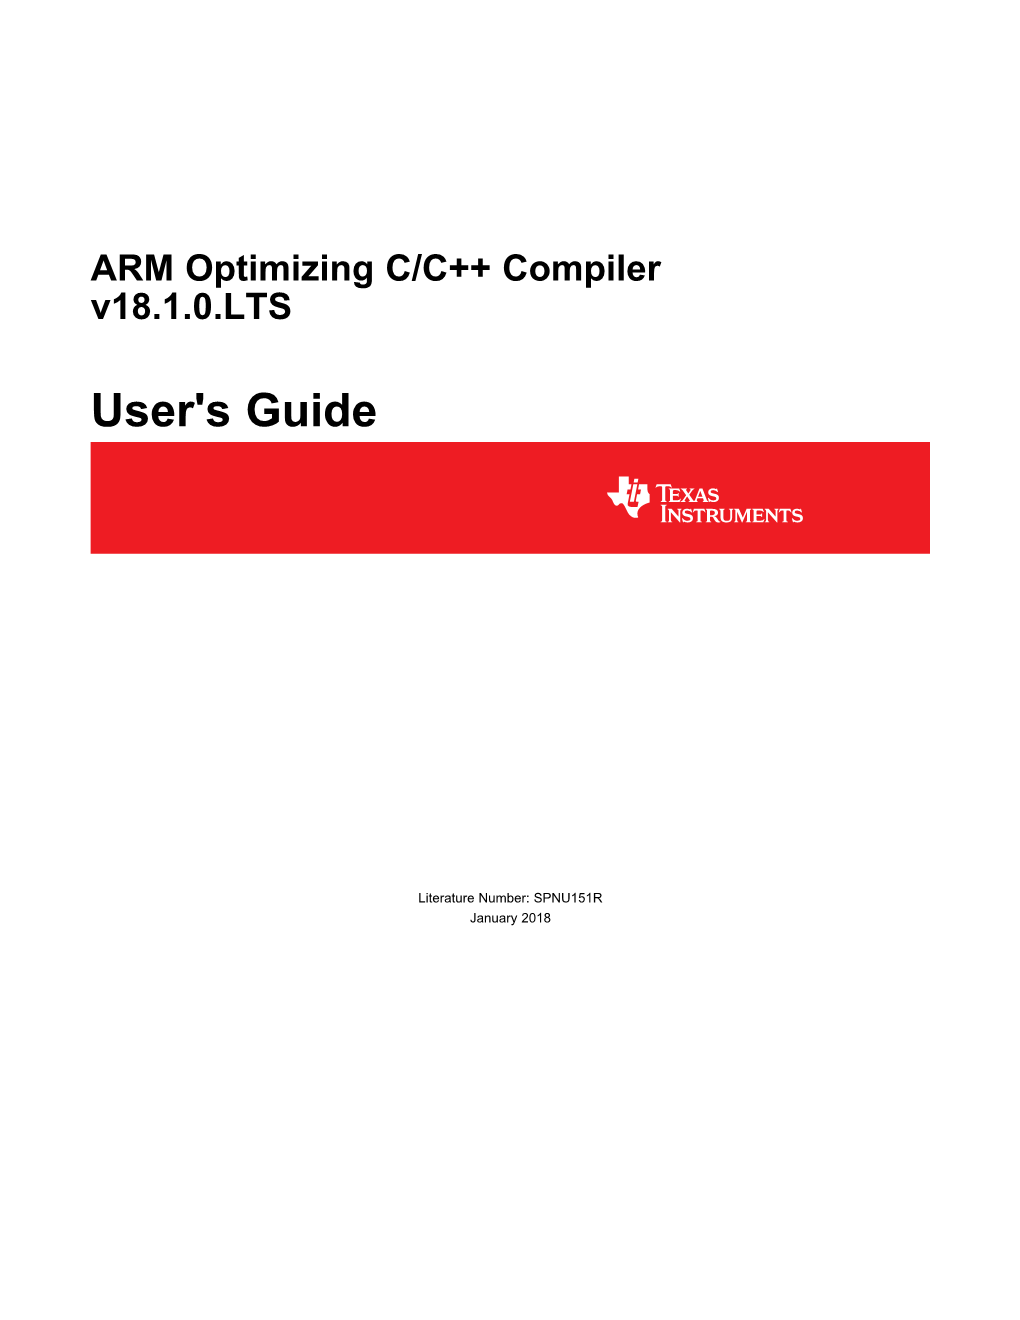 ARM Optimizing C/C++ Compiler V18.1.0.LTS